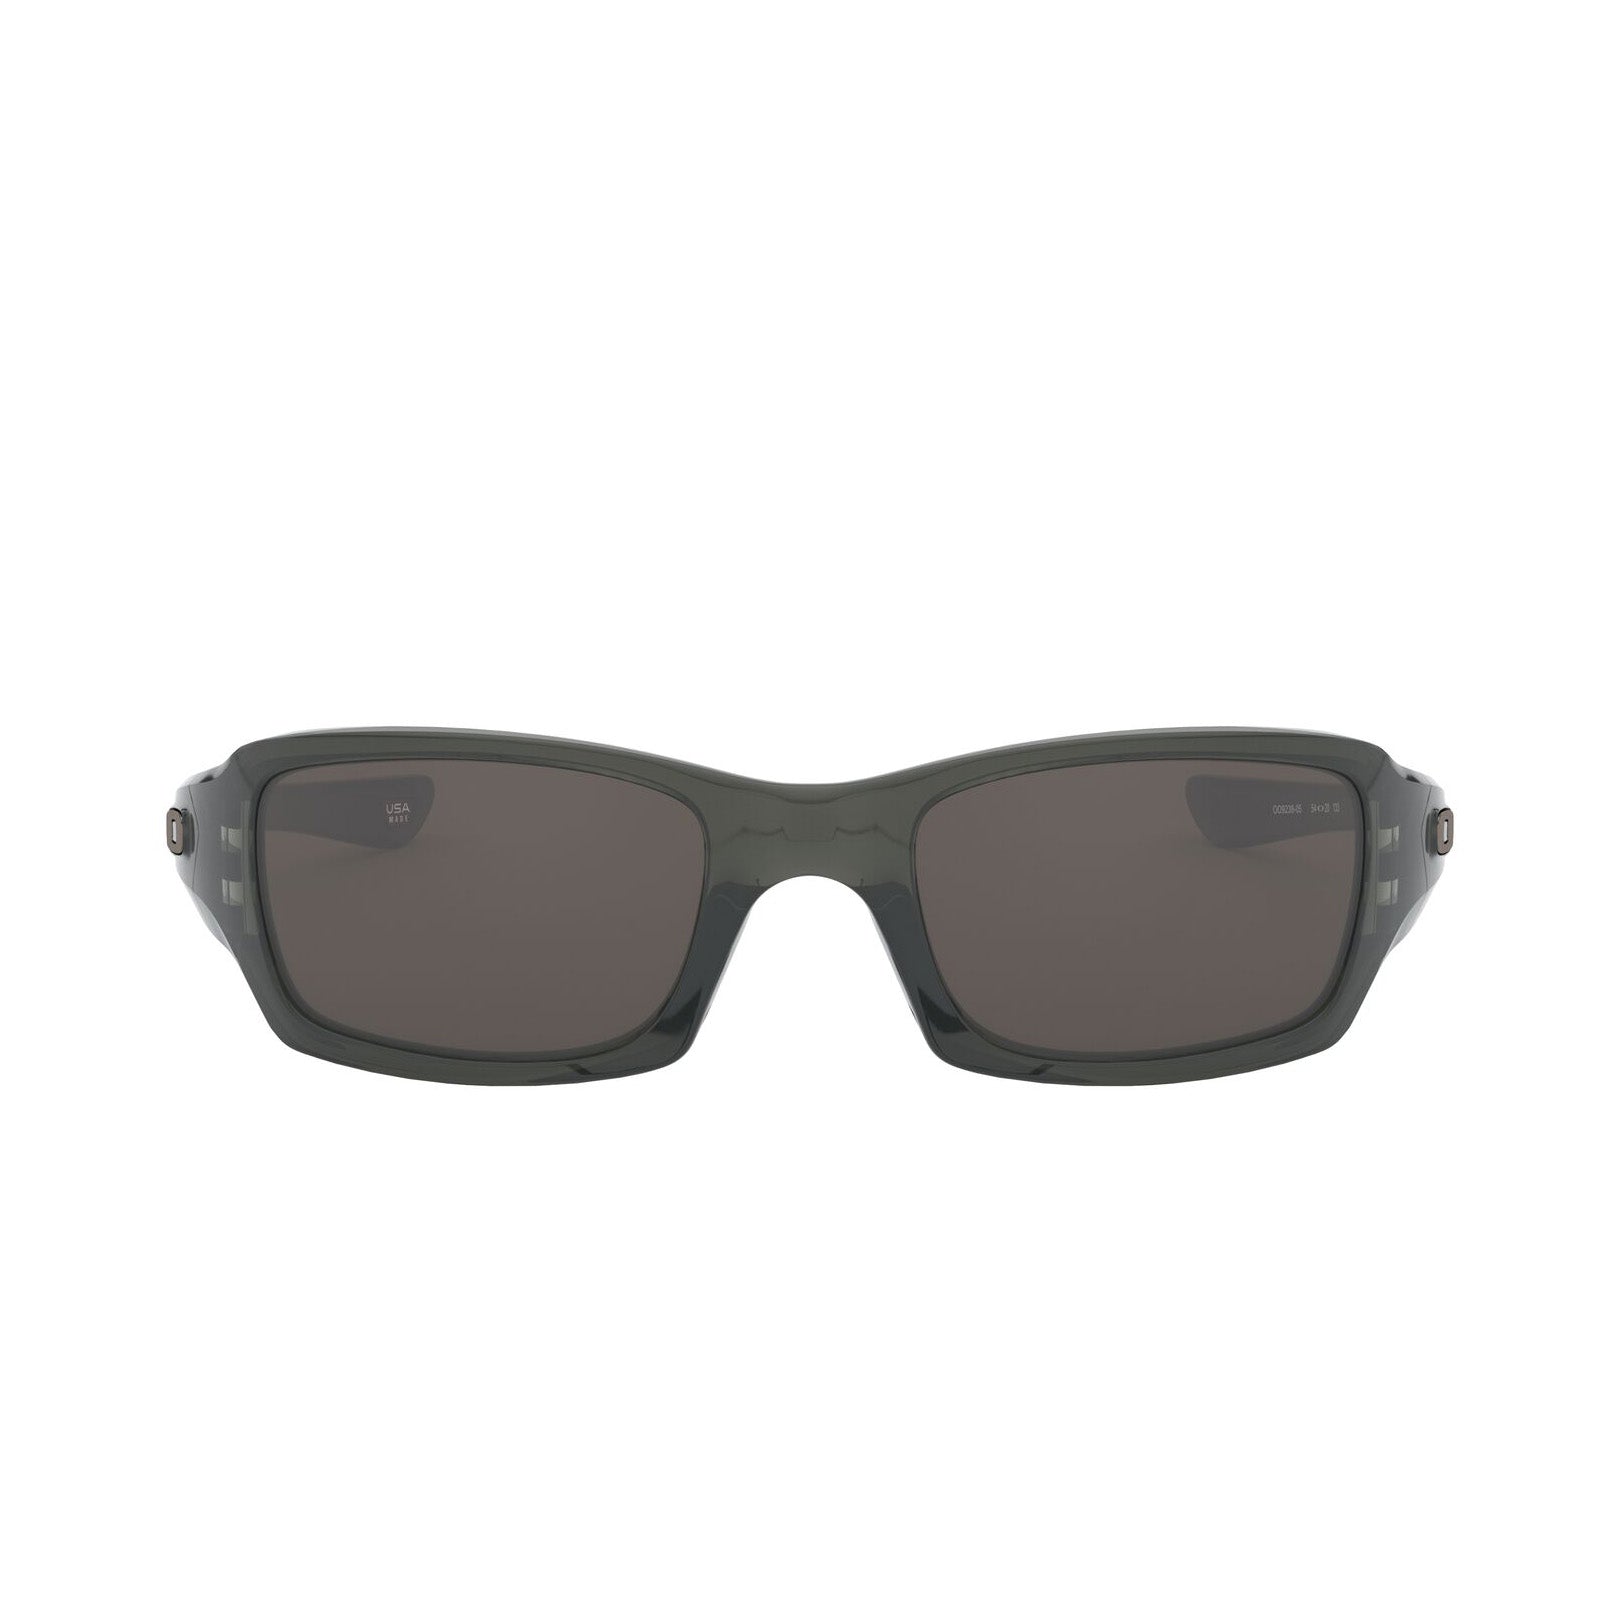 drifteyewear | Drift | Sunglasses | Classic styles | Adventure